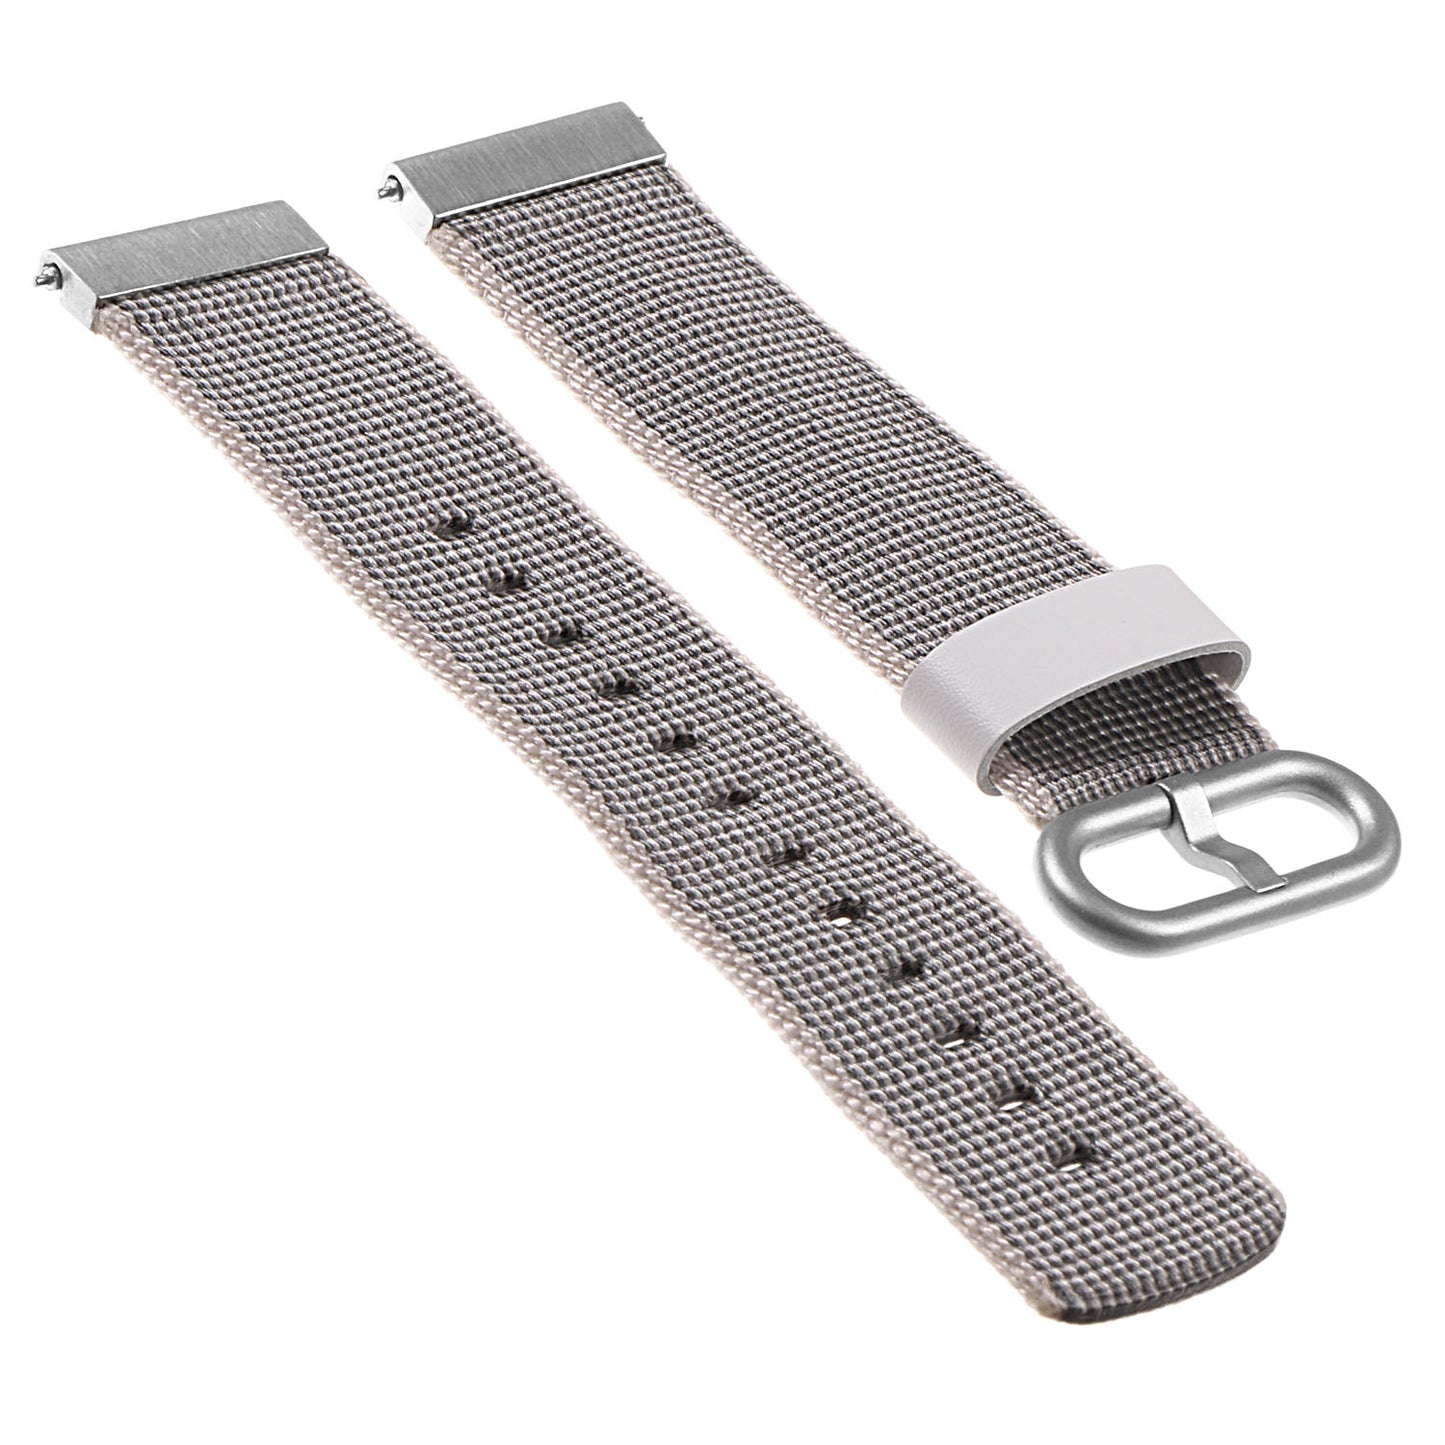 Nylon Strap for Samsung Galaxy Watch 4